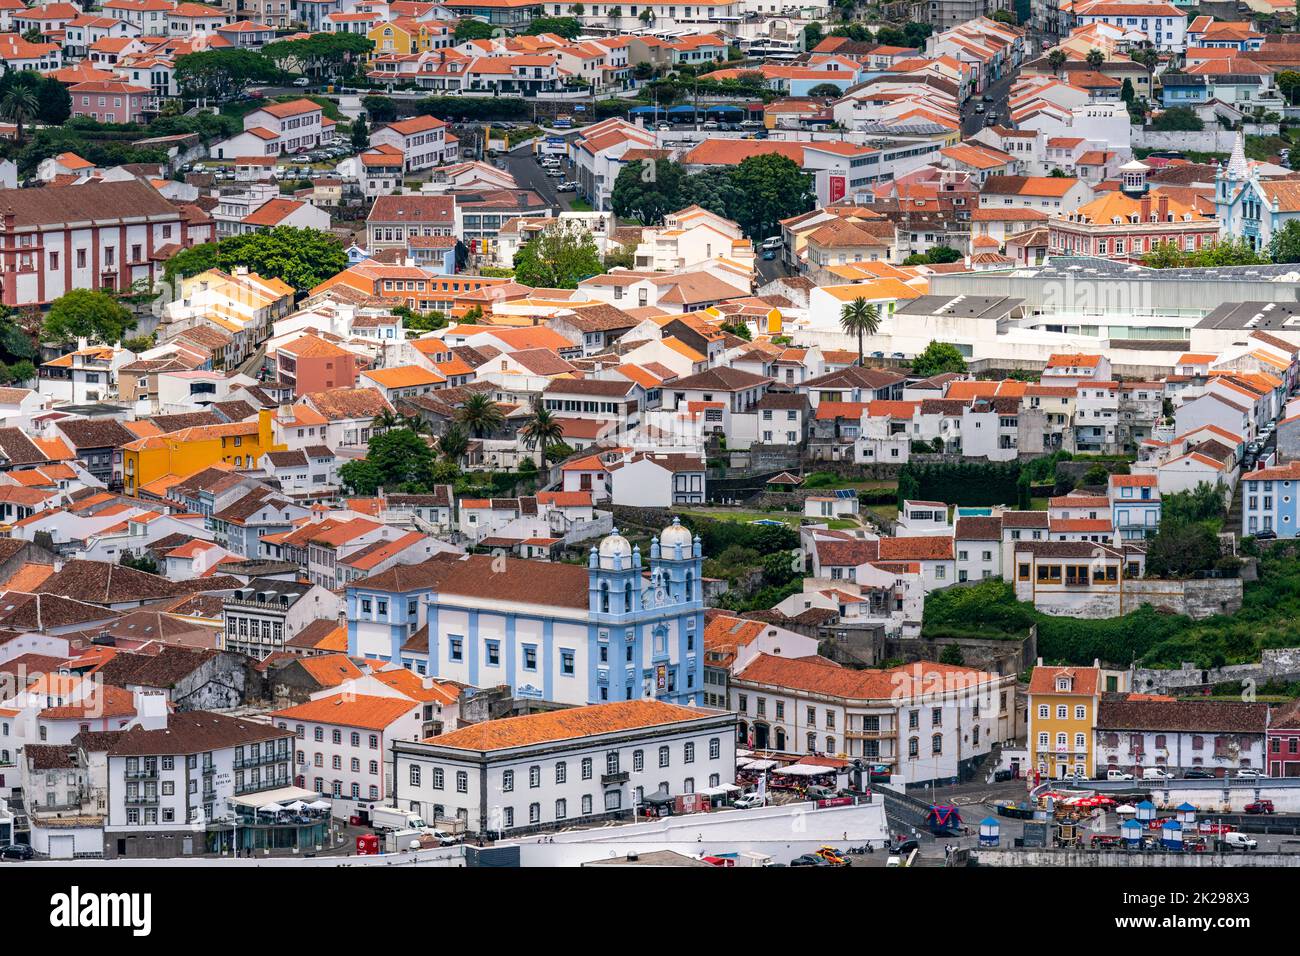 Vista del centro histórico de la ciudad, y la iglesia Igreja da Misericordia de Monte Brasil, en Angra do Heroismo, Isla Terceira, Azores, Portugal. Foto de stock